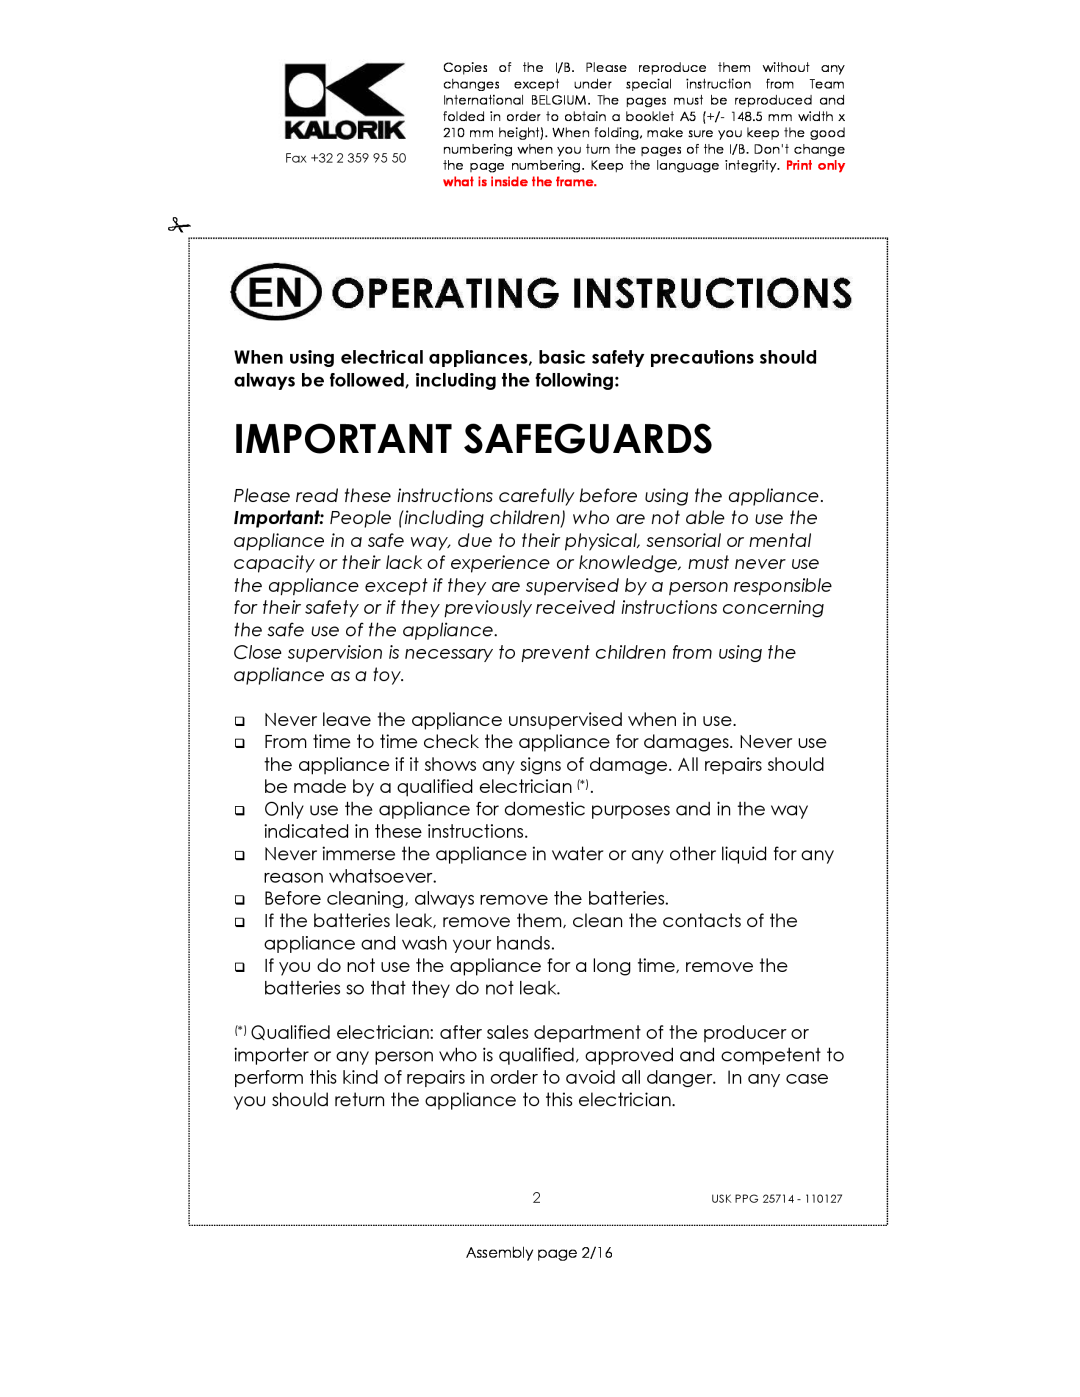 Kalorik USK PPG 25714 manual Important Safeguards 